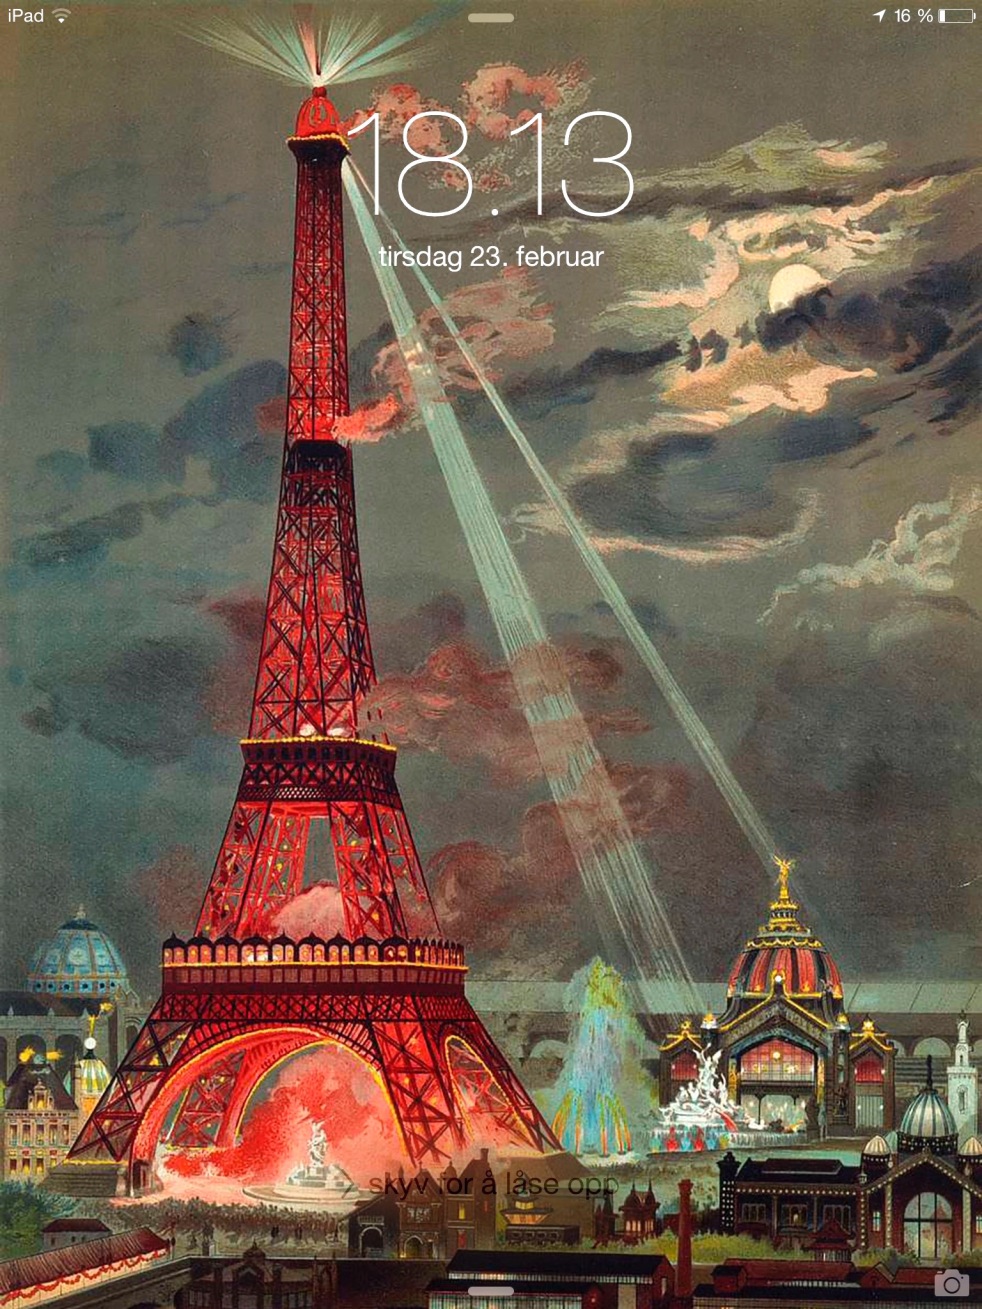 Wings of Whimsy: 1899 Eiffel Tower Wallpaper #vintage #ephemera #digital #wallpaper